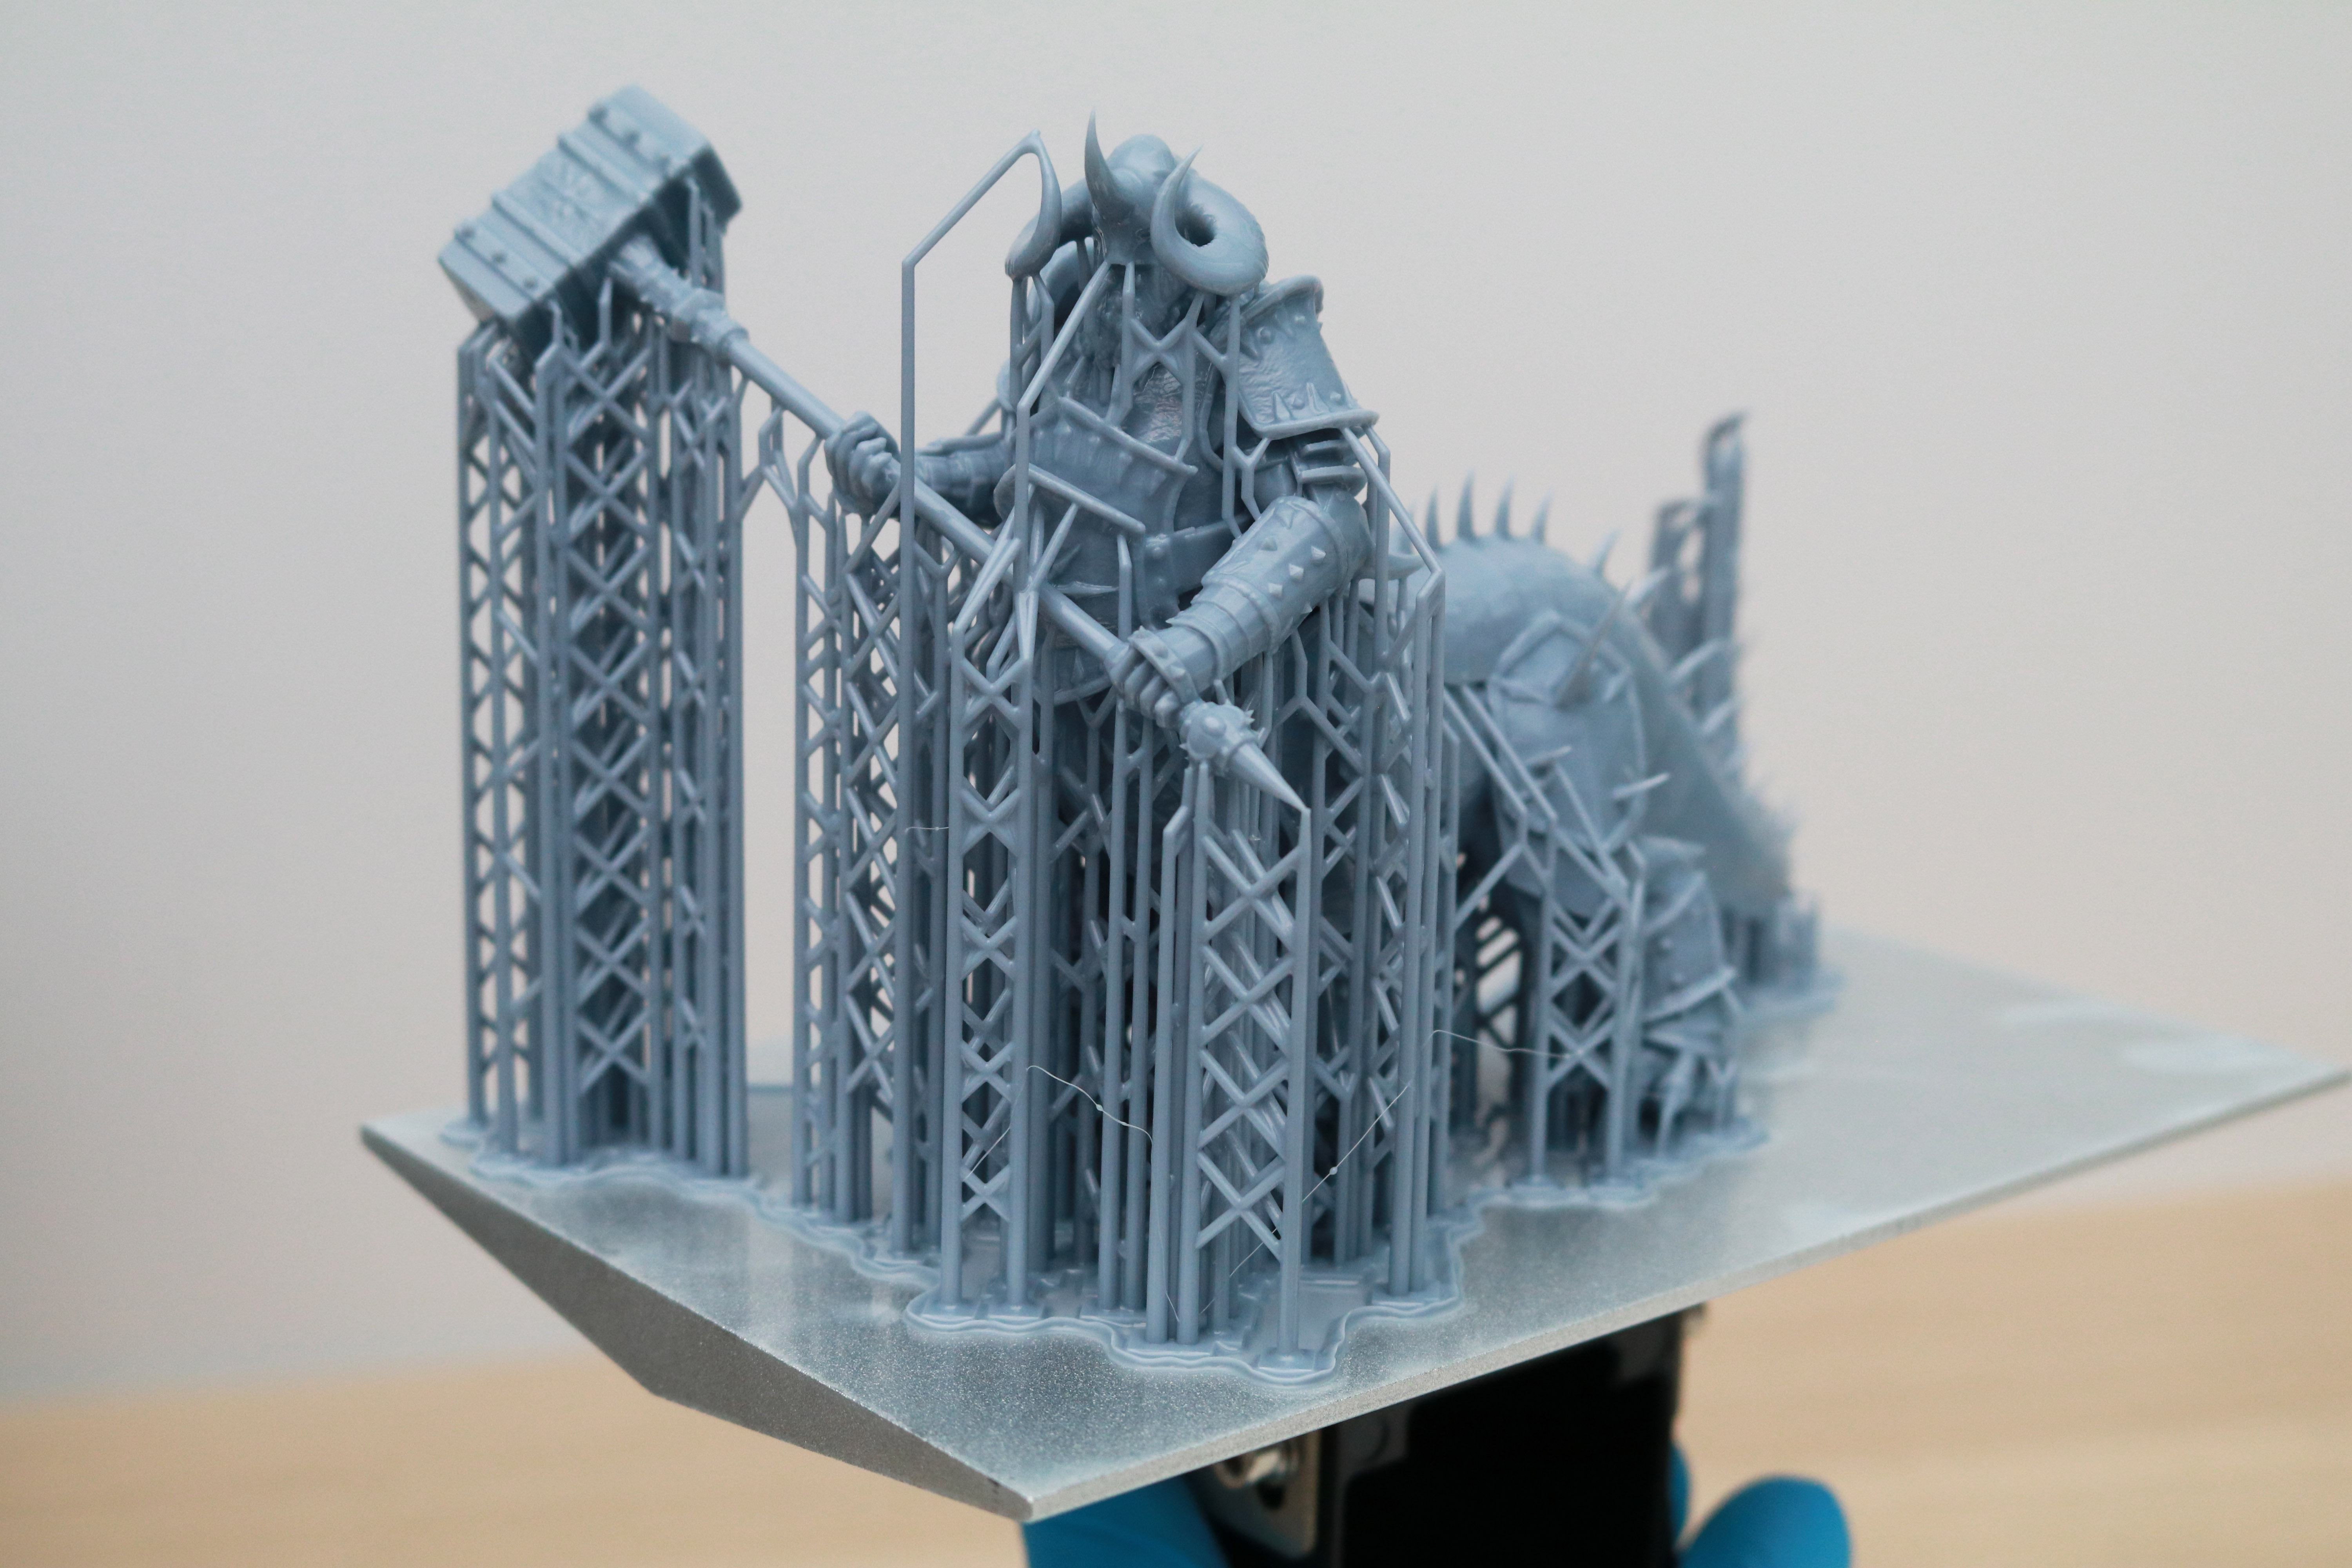 Creality Halot-One Plus 3D Printer